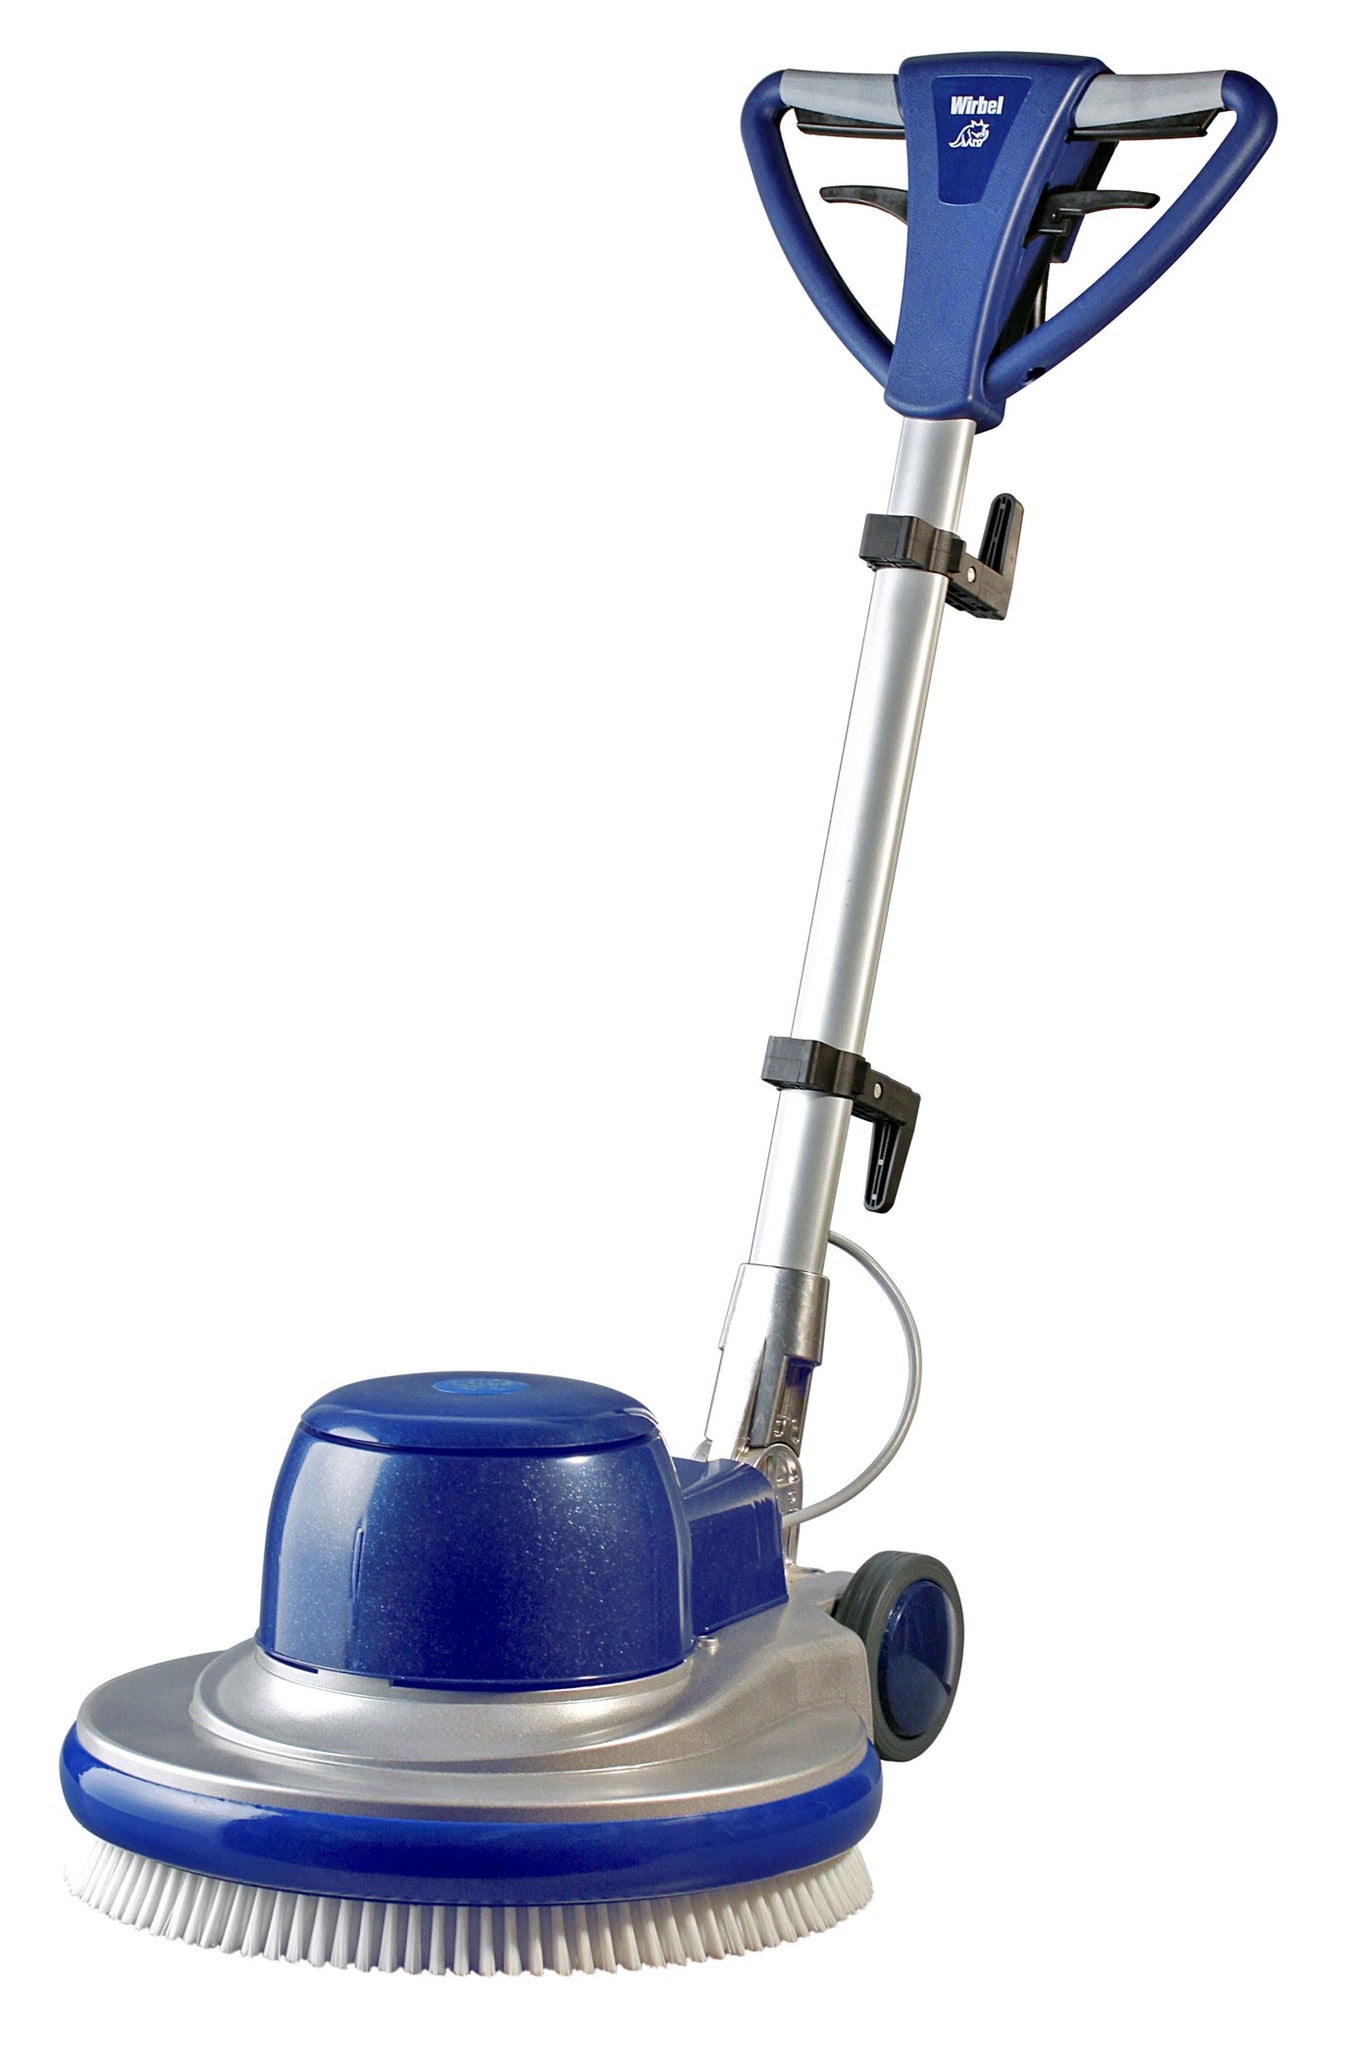 Prochem GH3140 Floor Pro L10 Low Speed Rotary Carpet & Floor Cleaning Machine